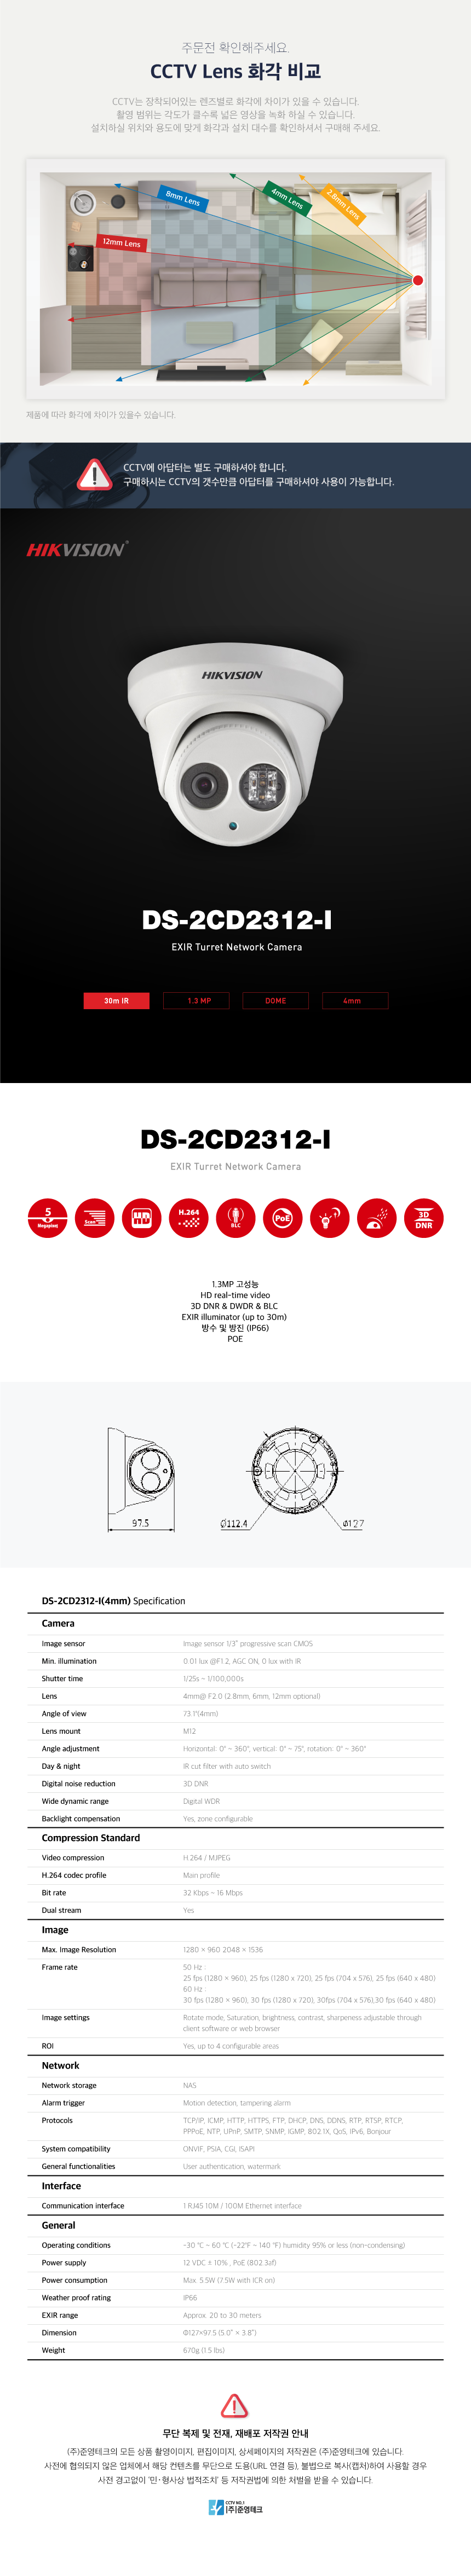 DS-2CD2312-I_4mm_160028_175038.png